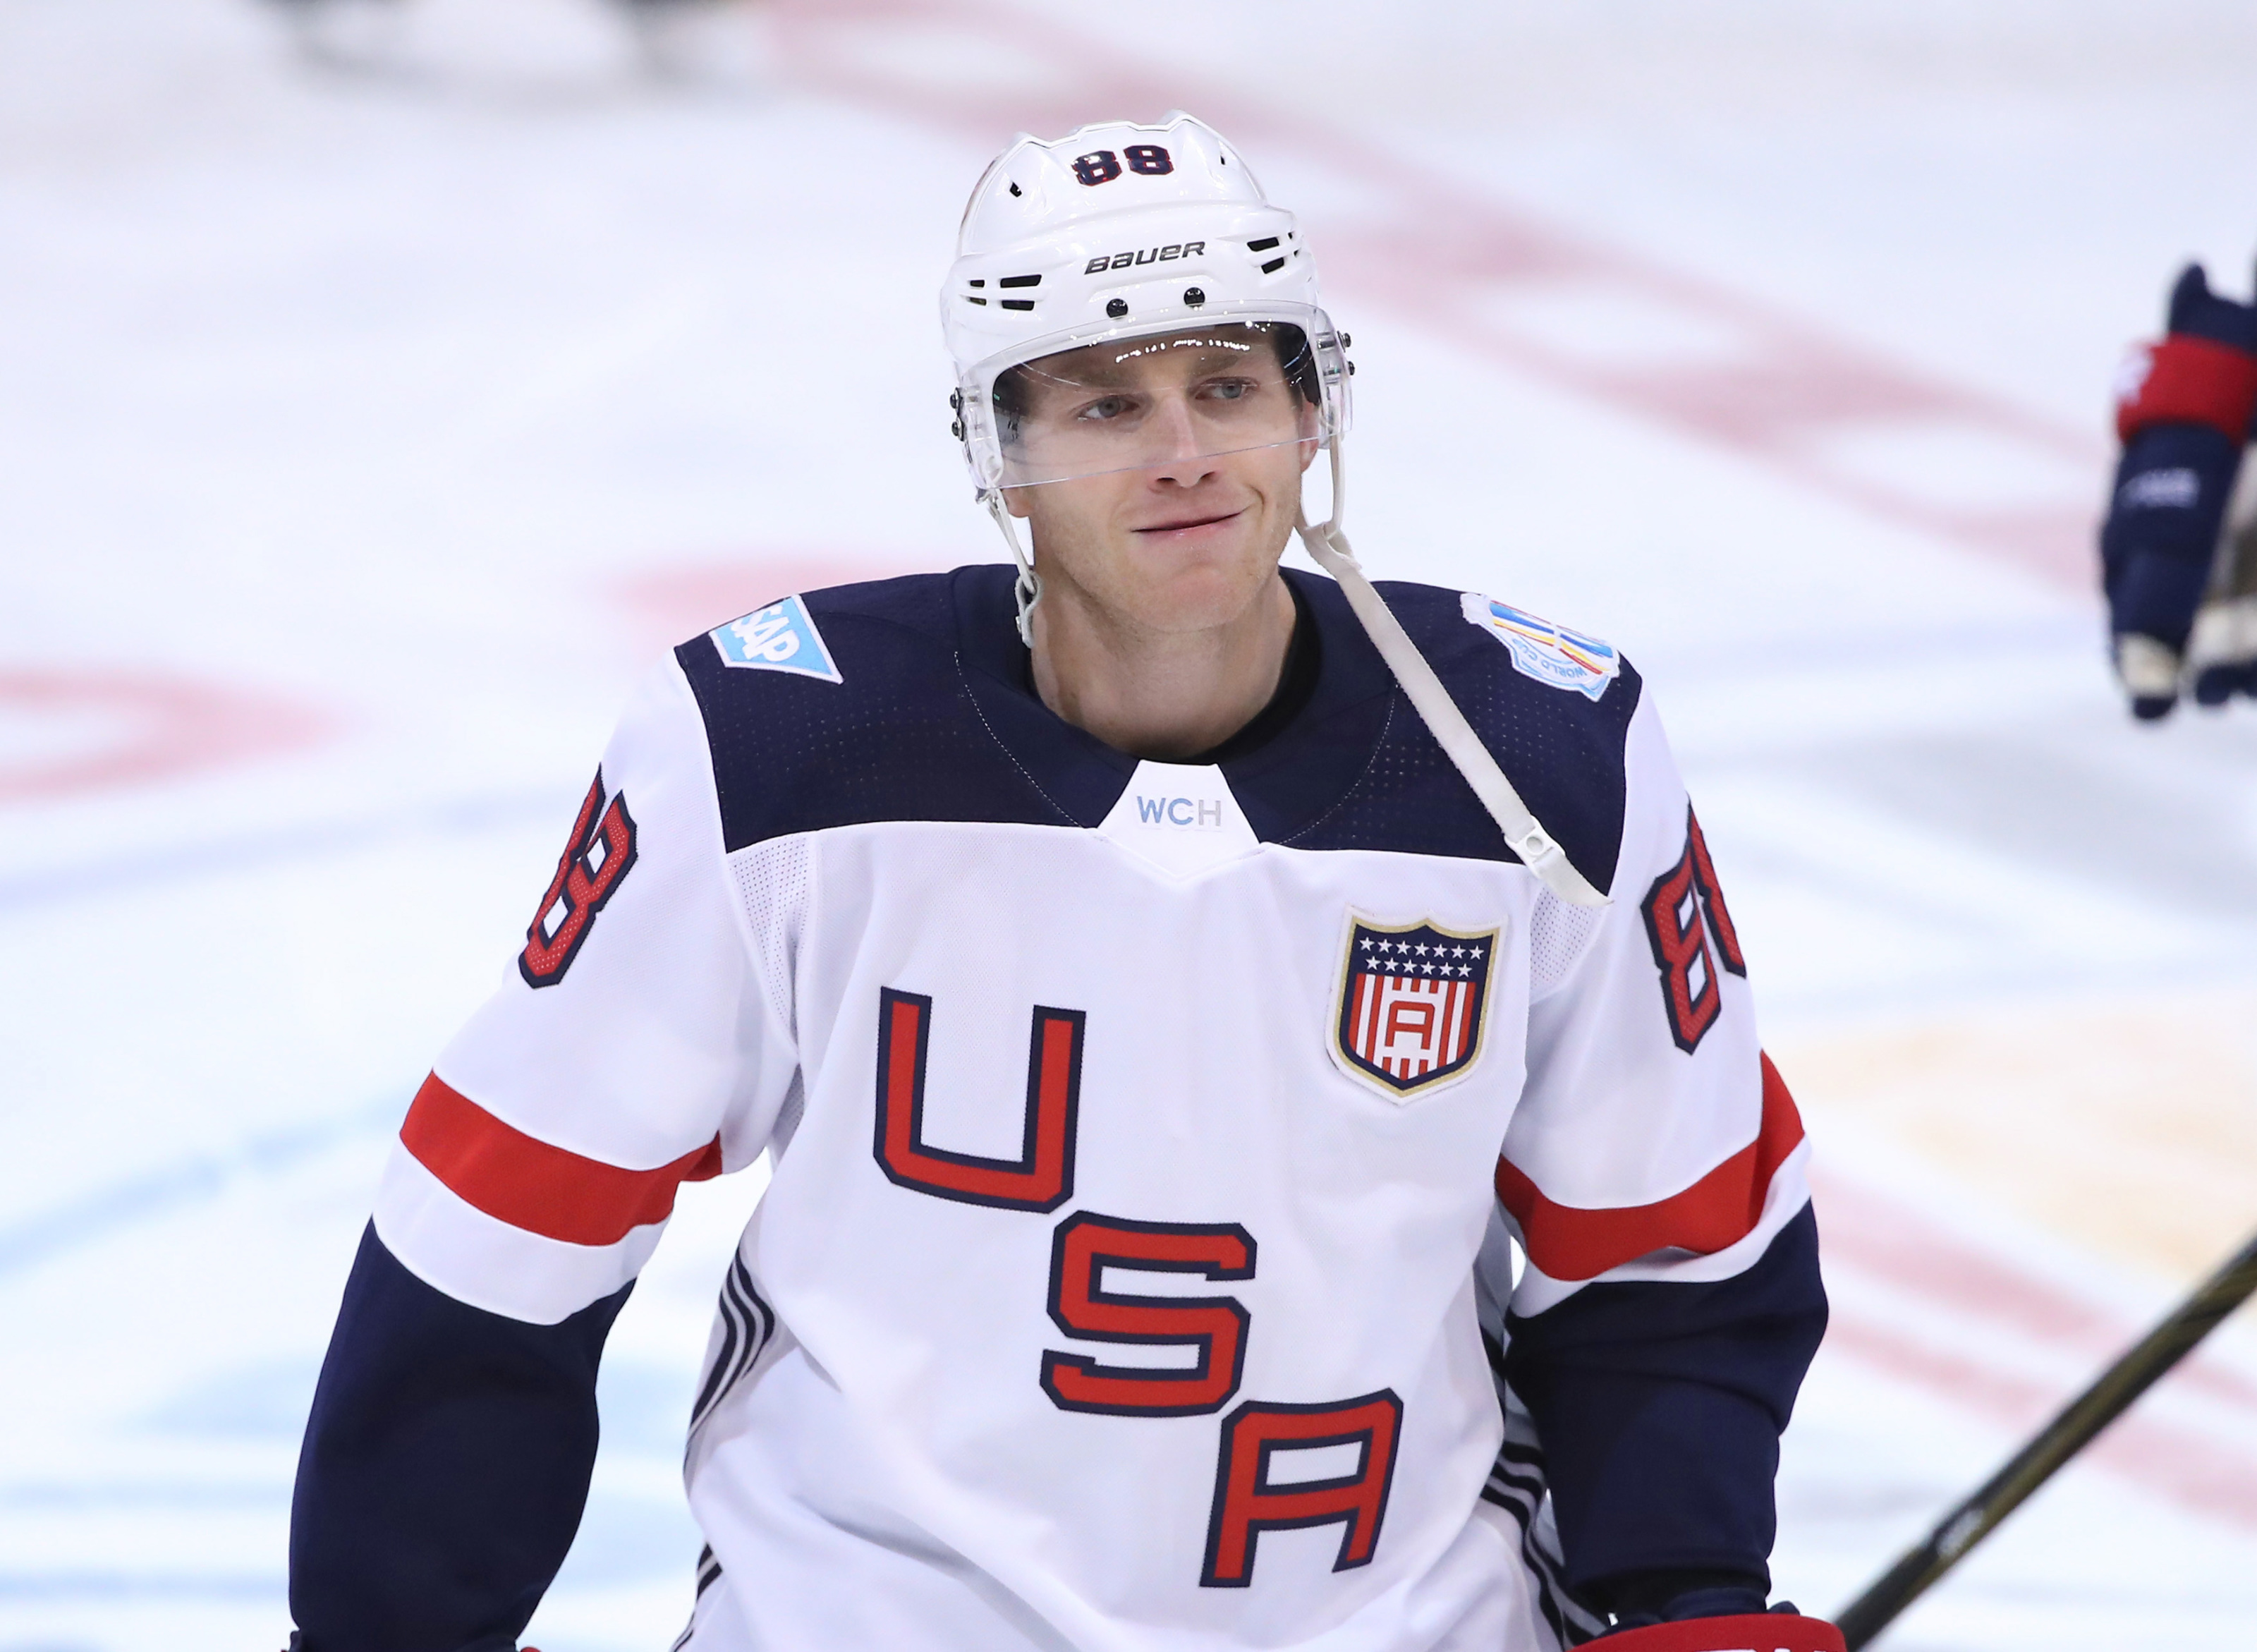 US men's ice hockey team appoint Kane as captain